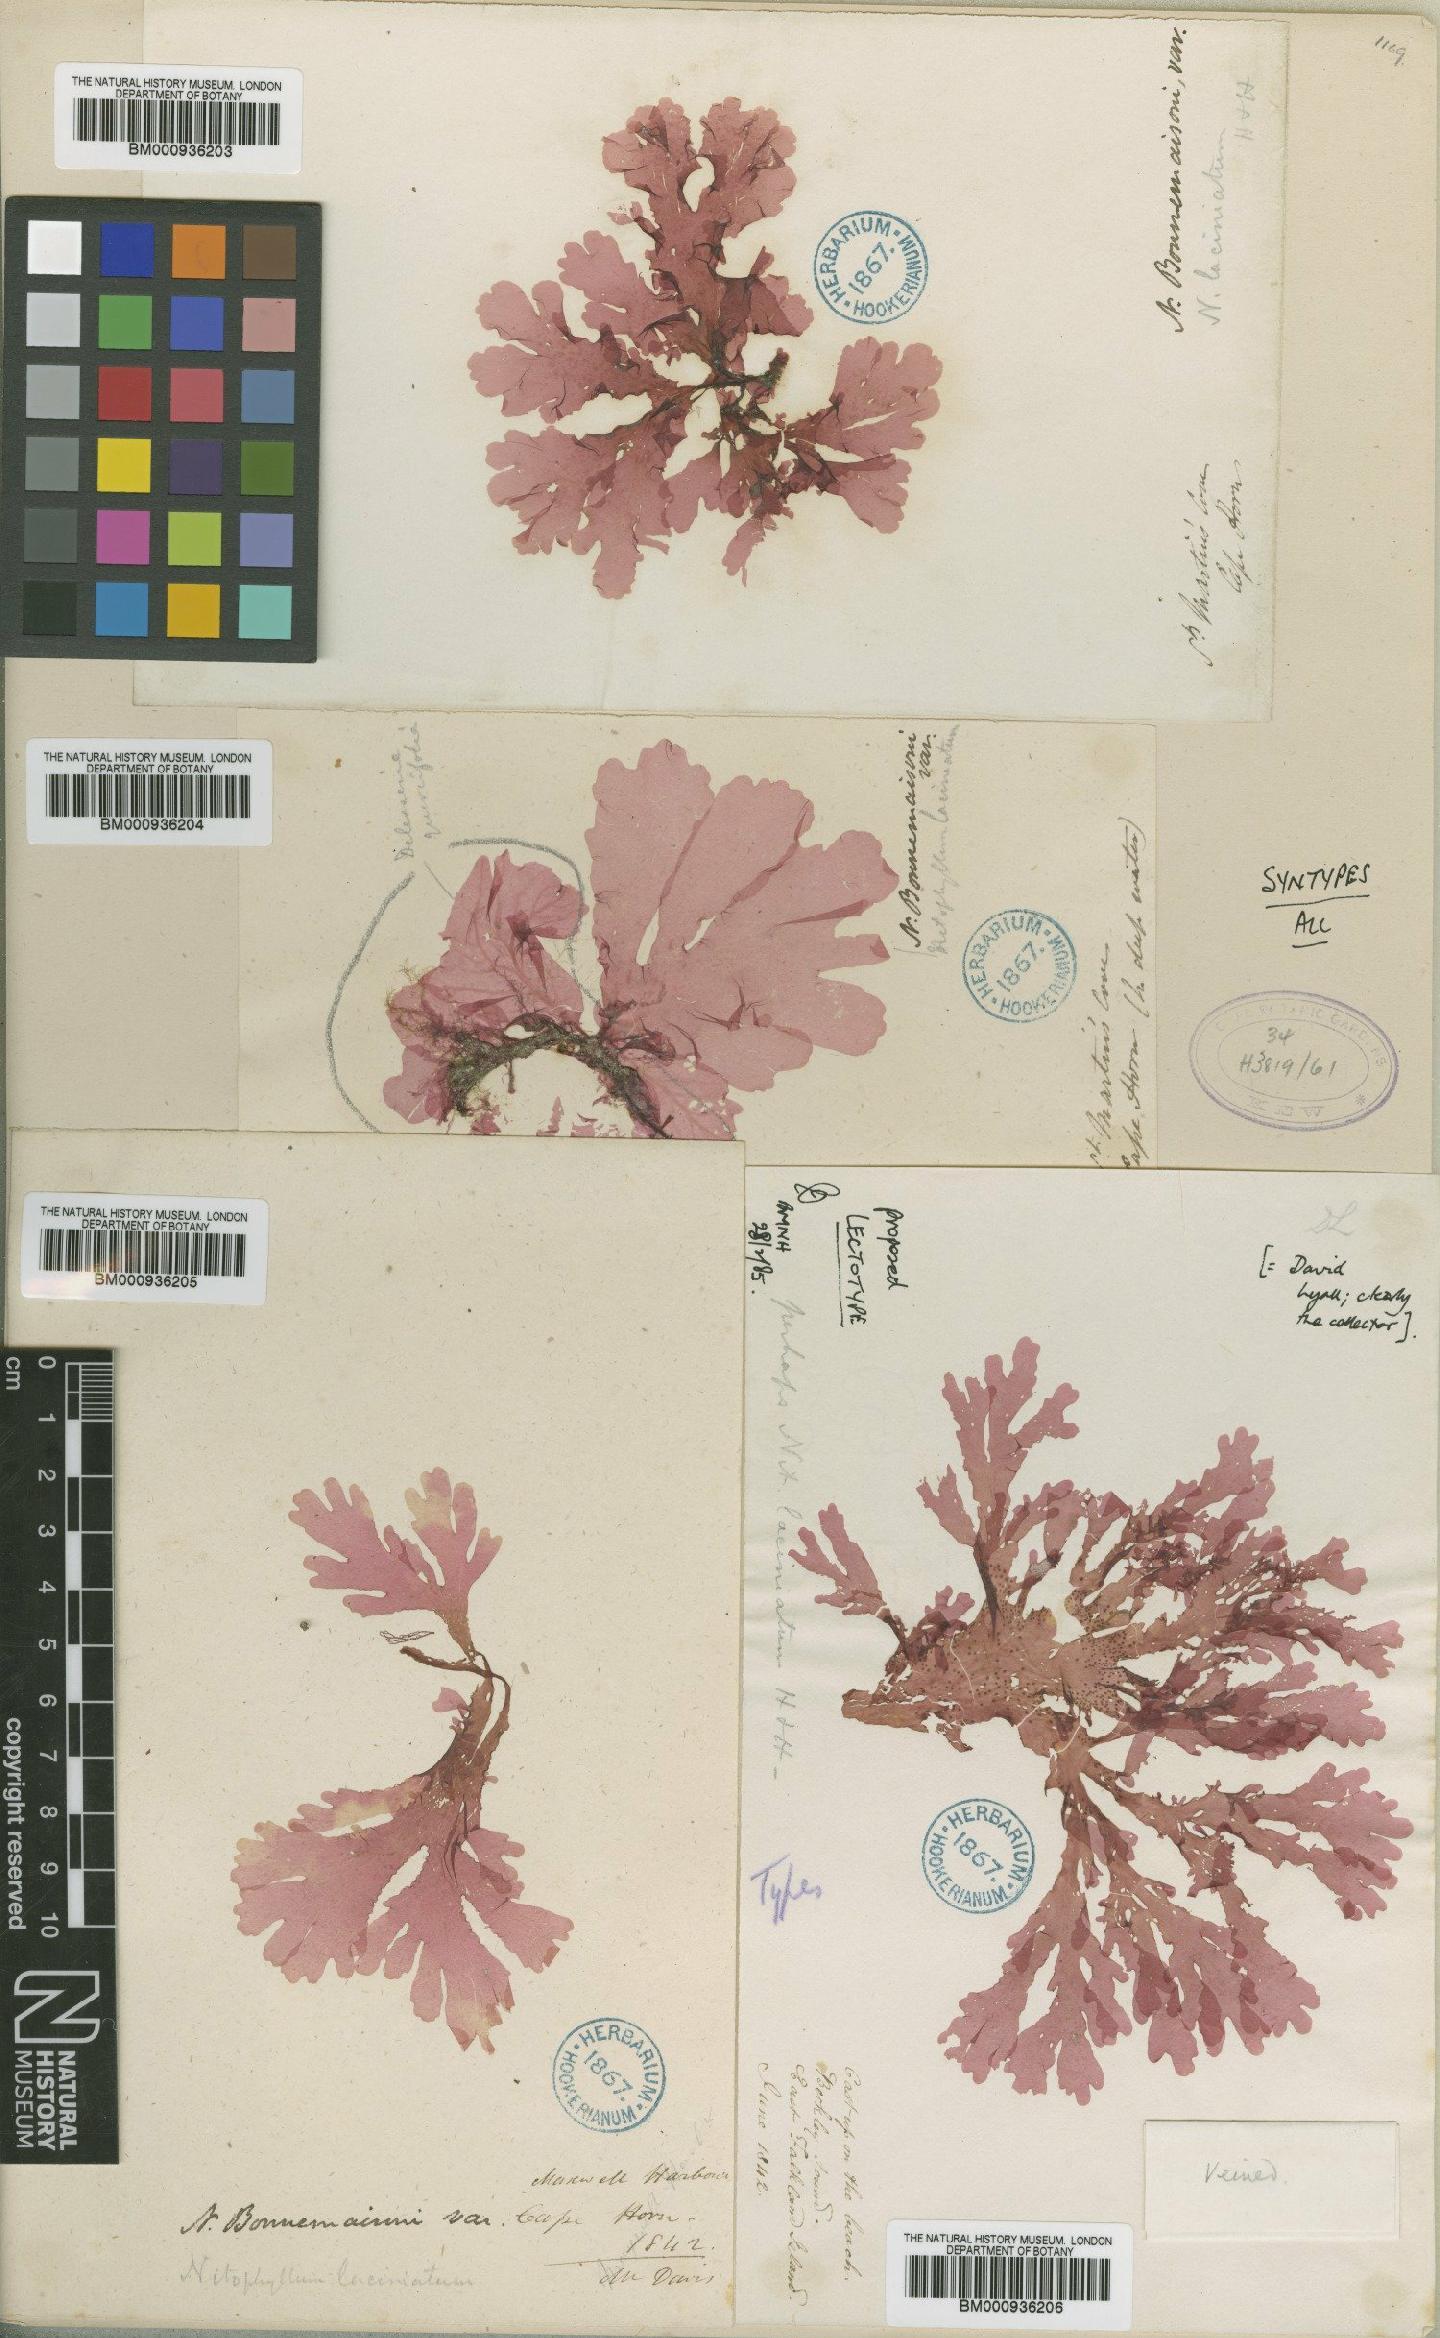 To NHMUK collection (Hymenena laciniata (Hook. & Harv.) Kylin; Syntype; NHMUK:ecatalogue:437423)